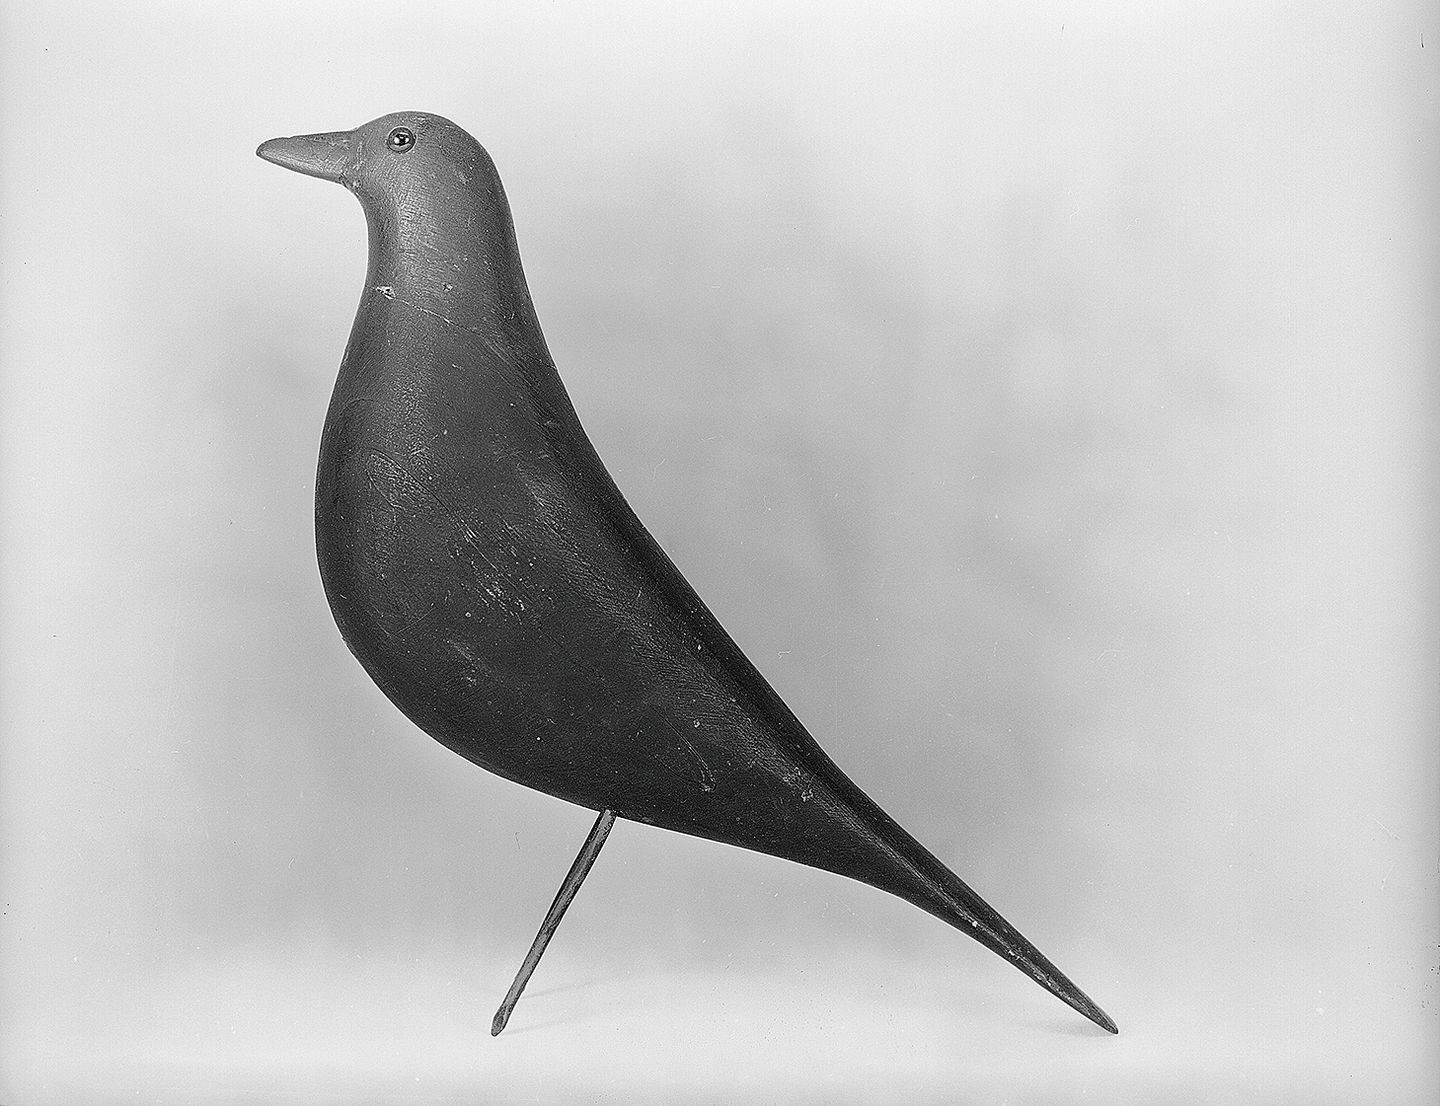 Eames house bird - Toda la historia de un pajarito icónico